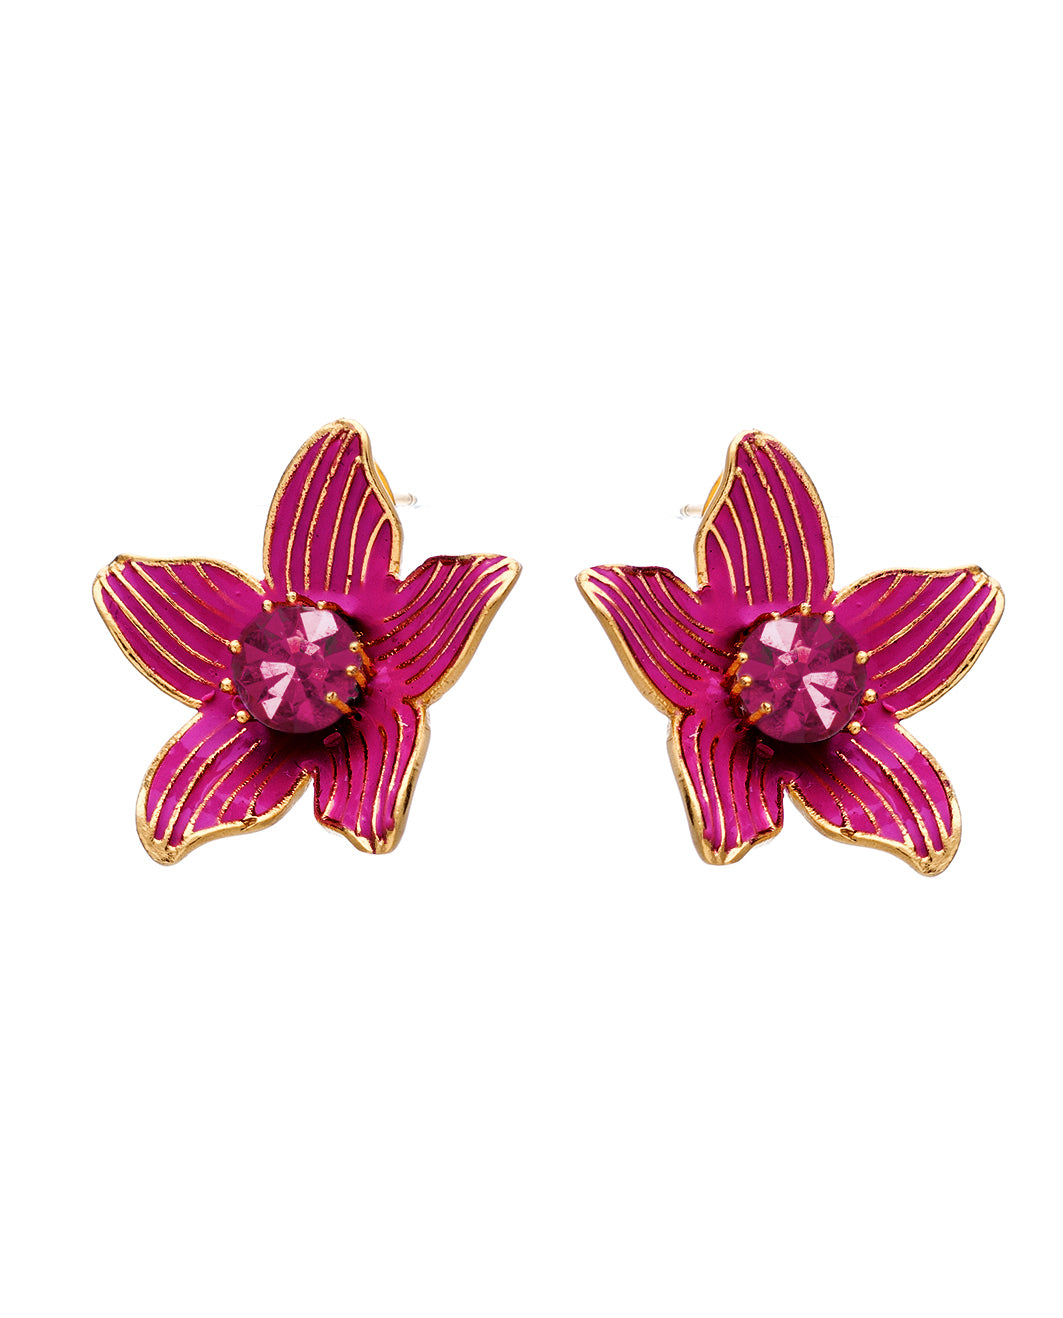 Floret earrings